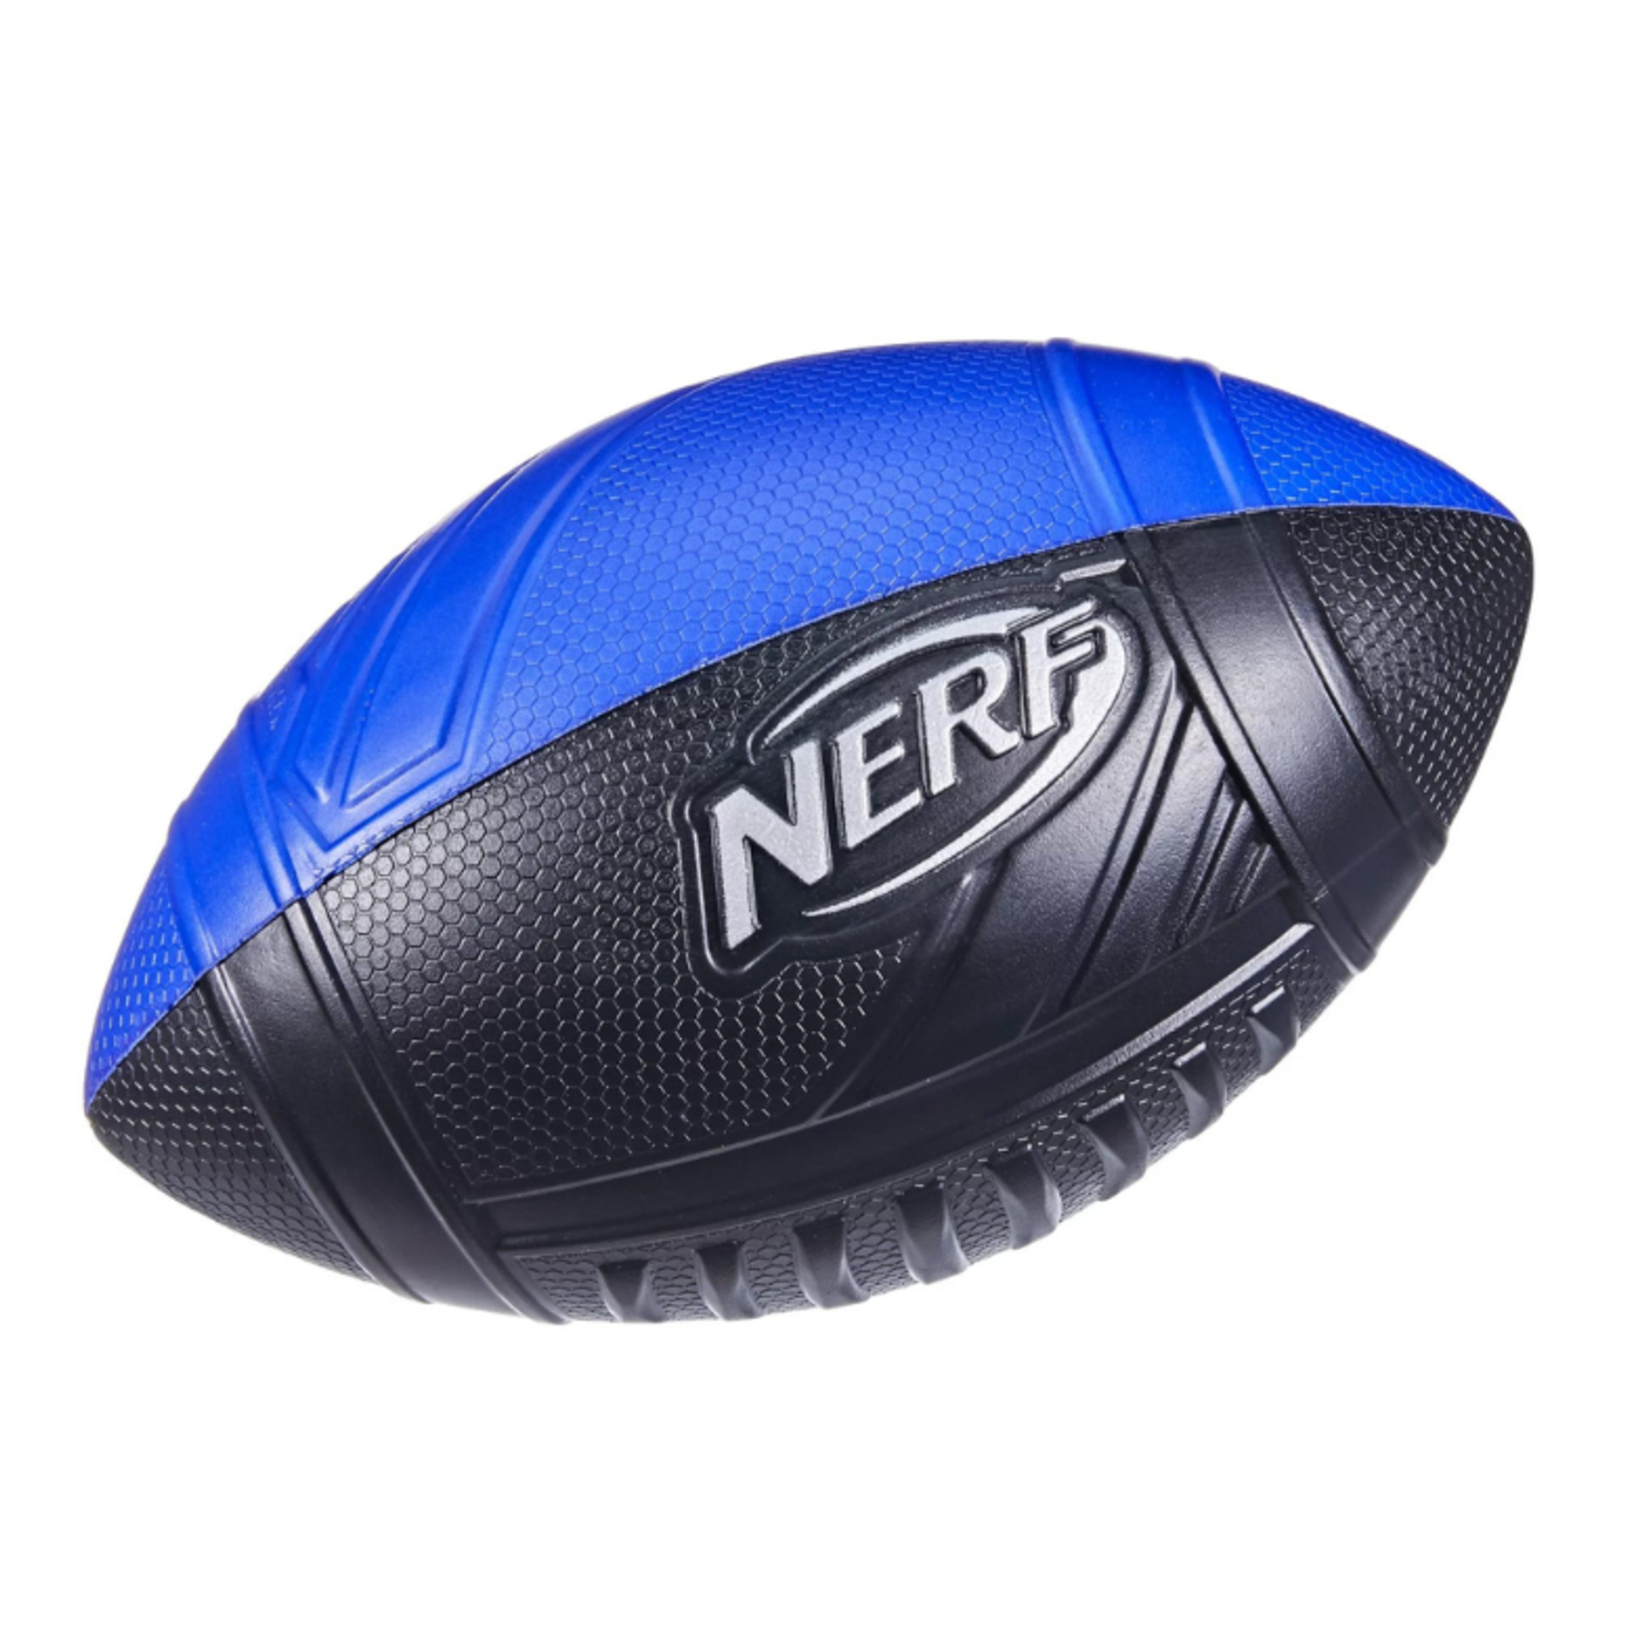 Nerf Nerf Pro Grip Football